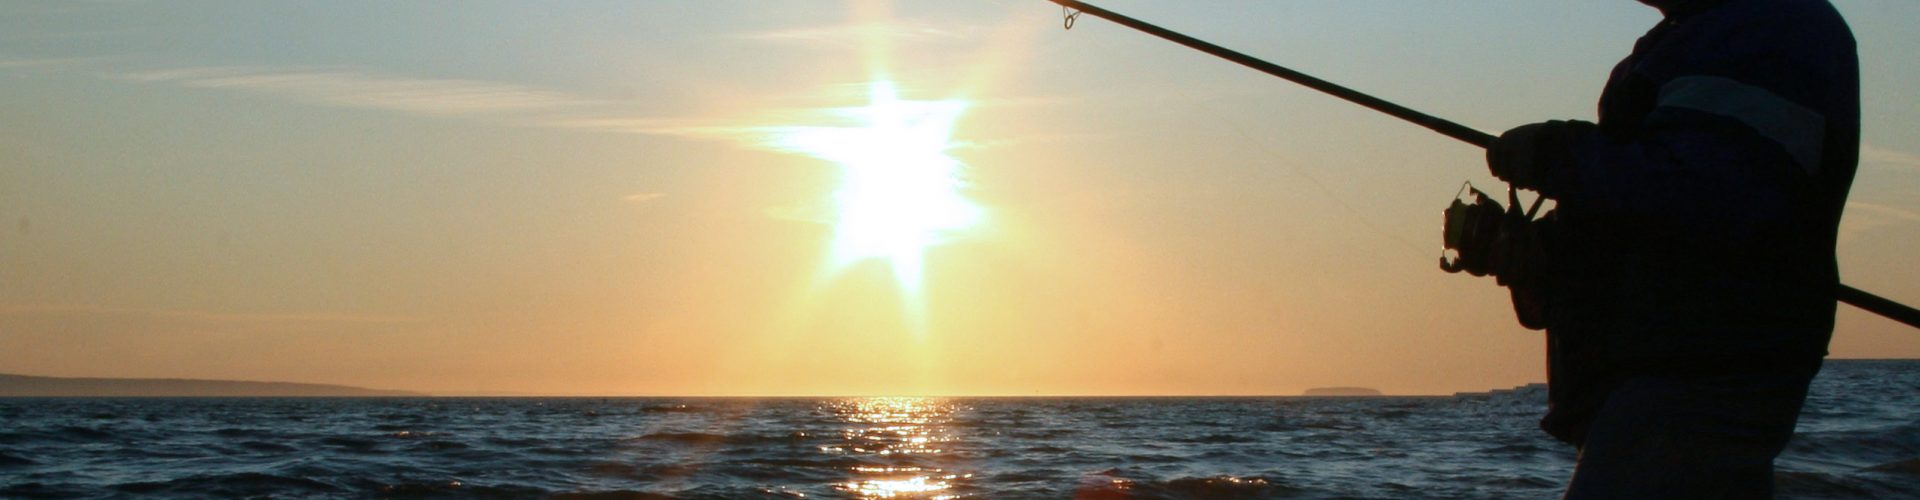 Deep sea fishing rod and reel